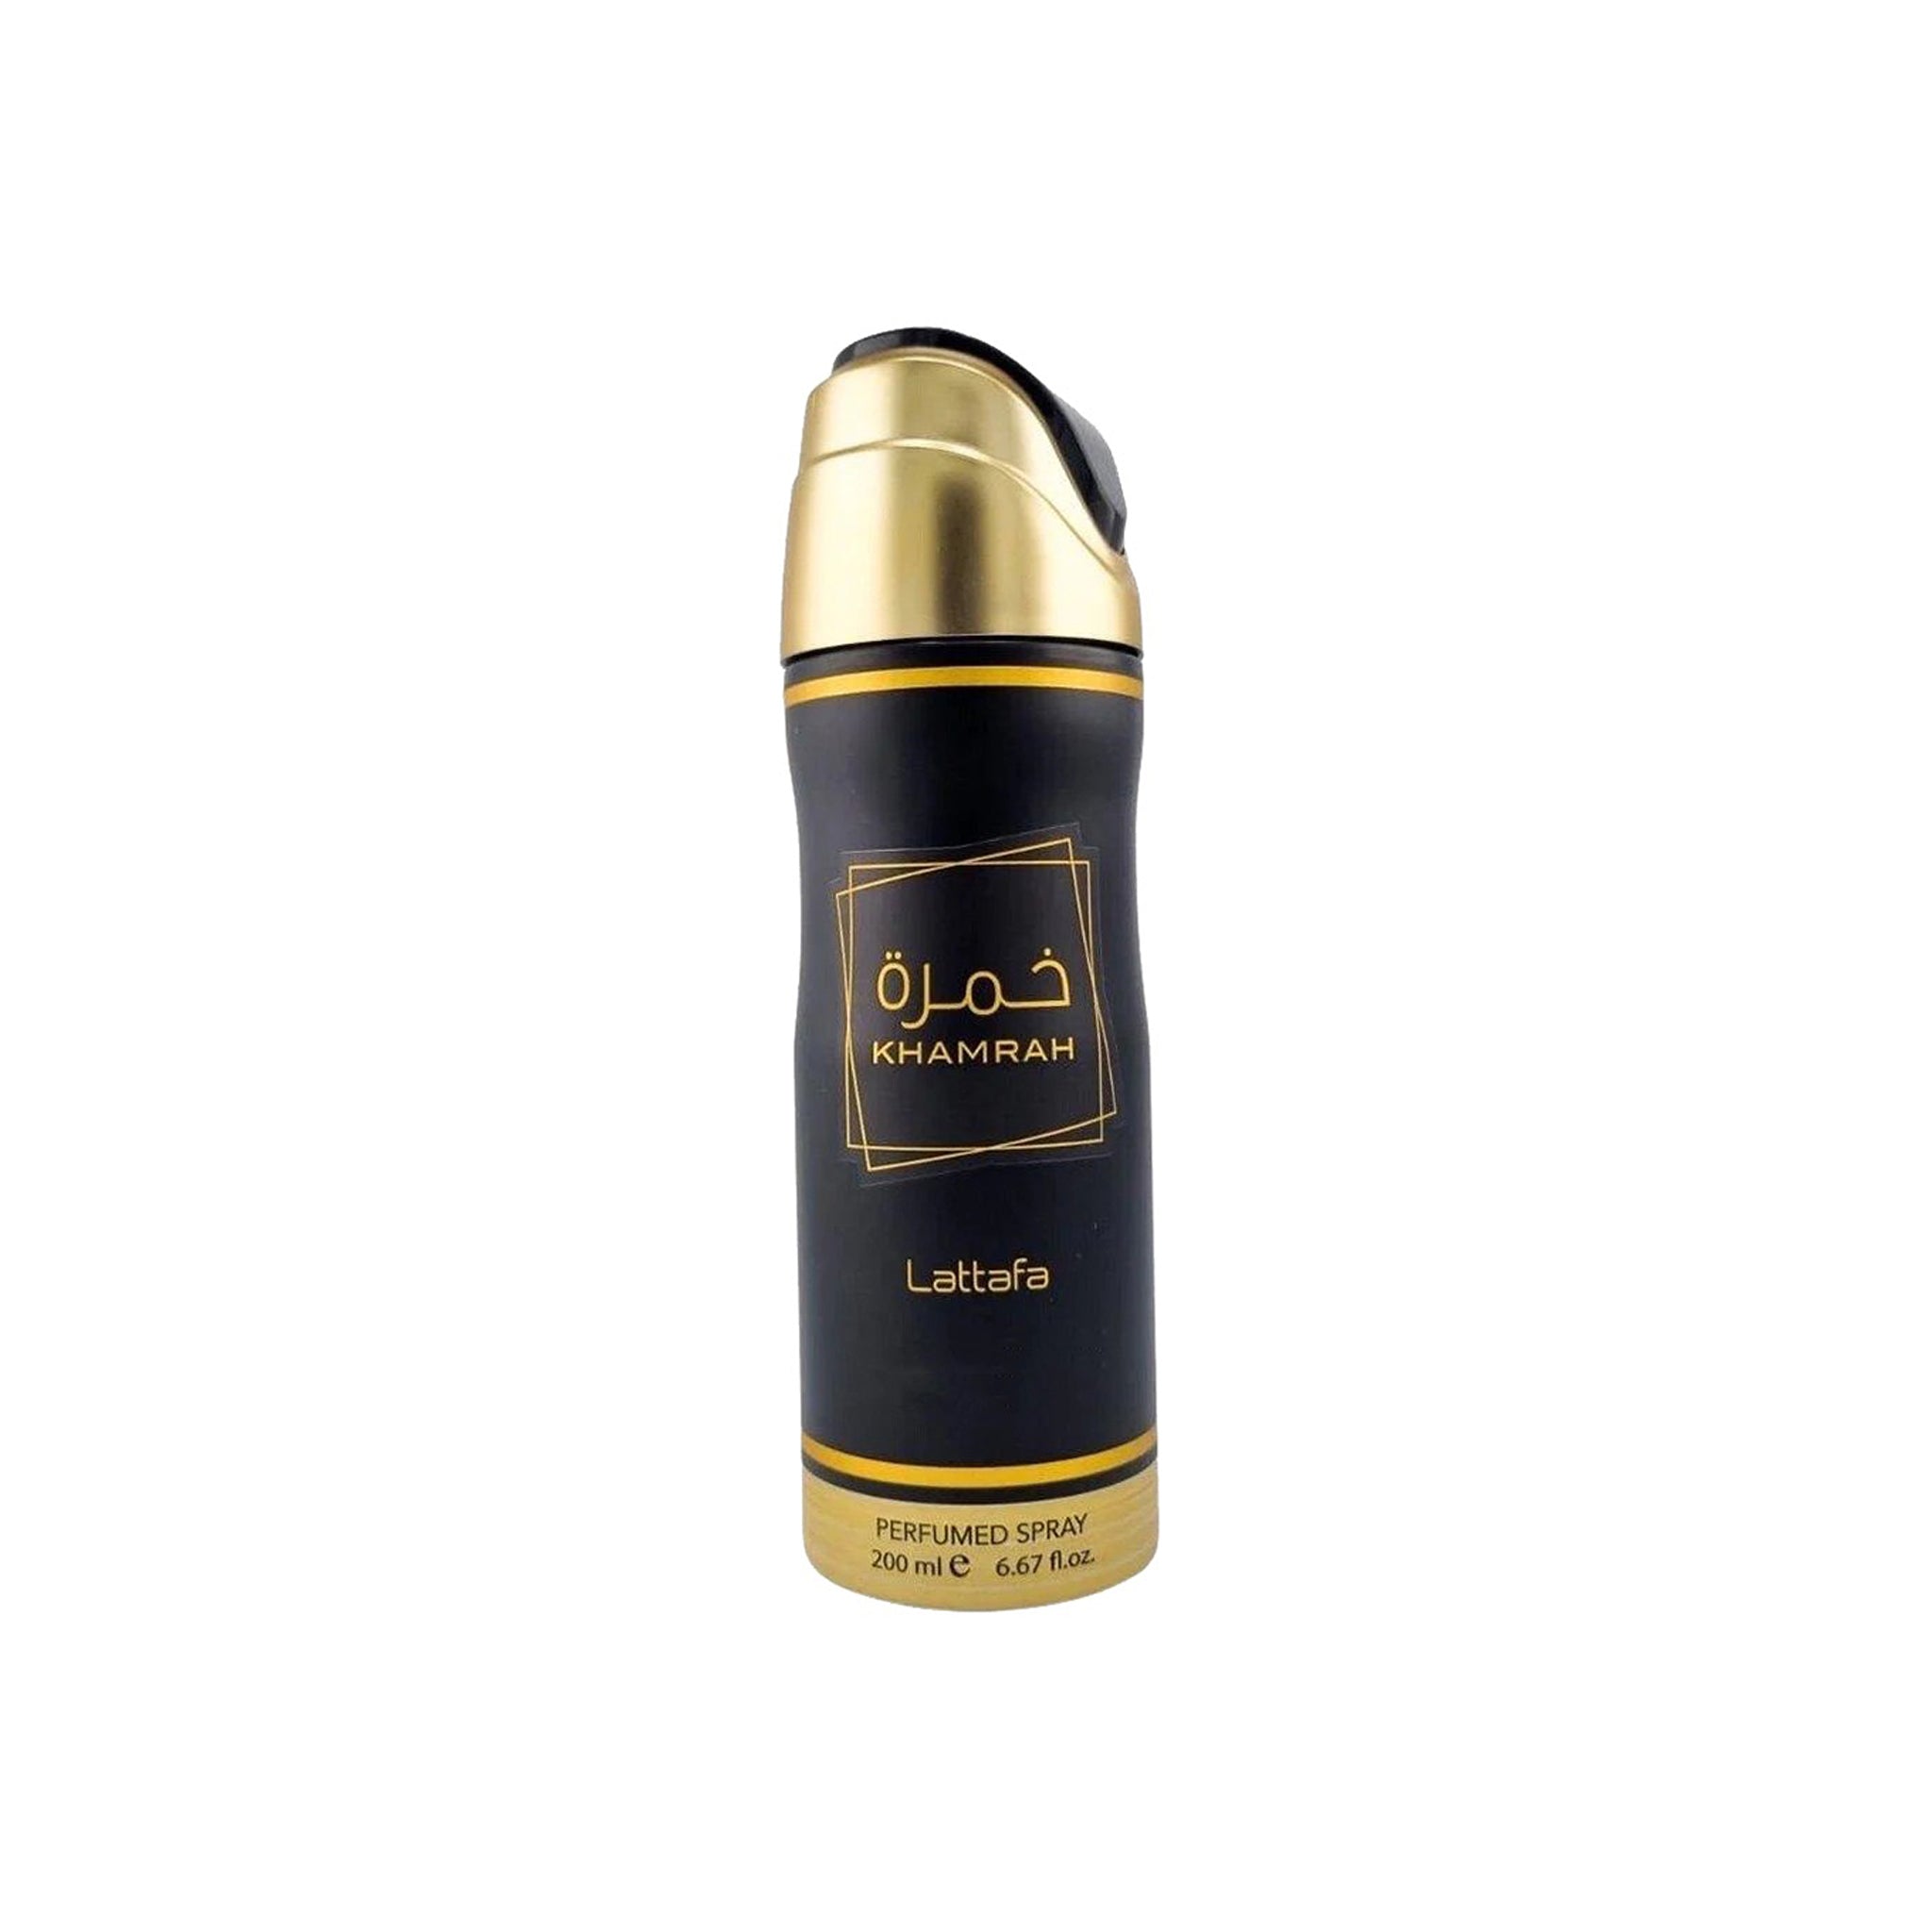 Khamrah Deodorant 200ml by Lattafa